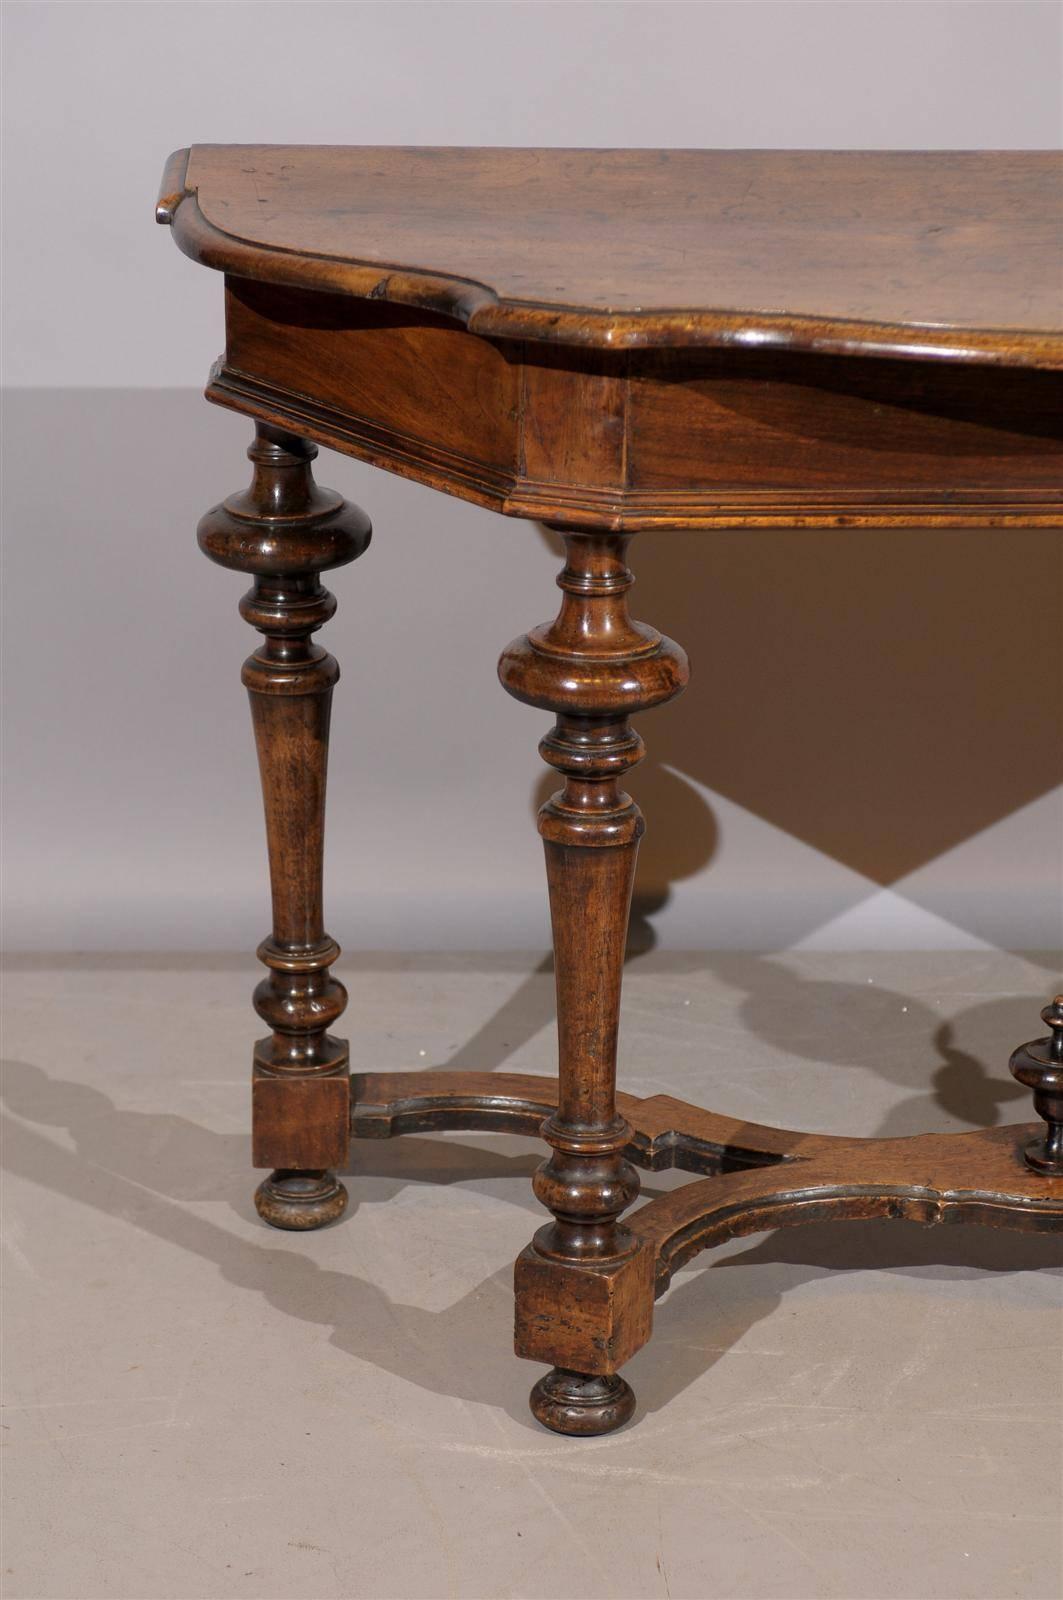 Italian 17th Century Tuscany Walnut Console Table with Turned Legs